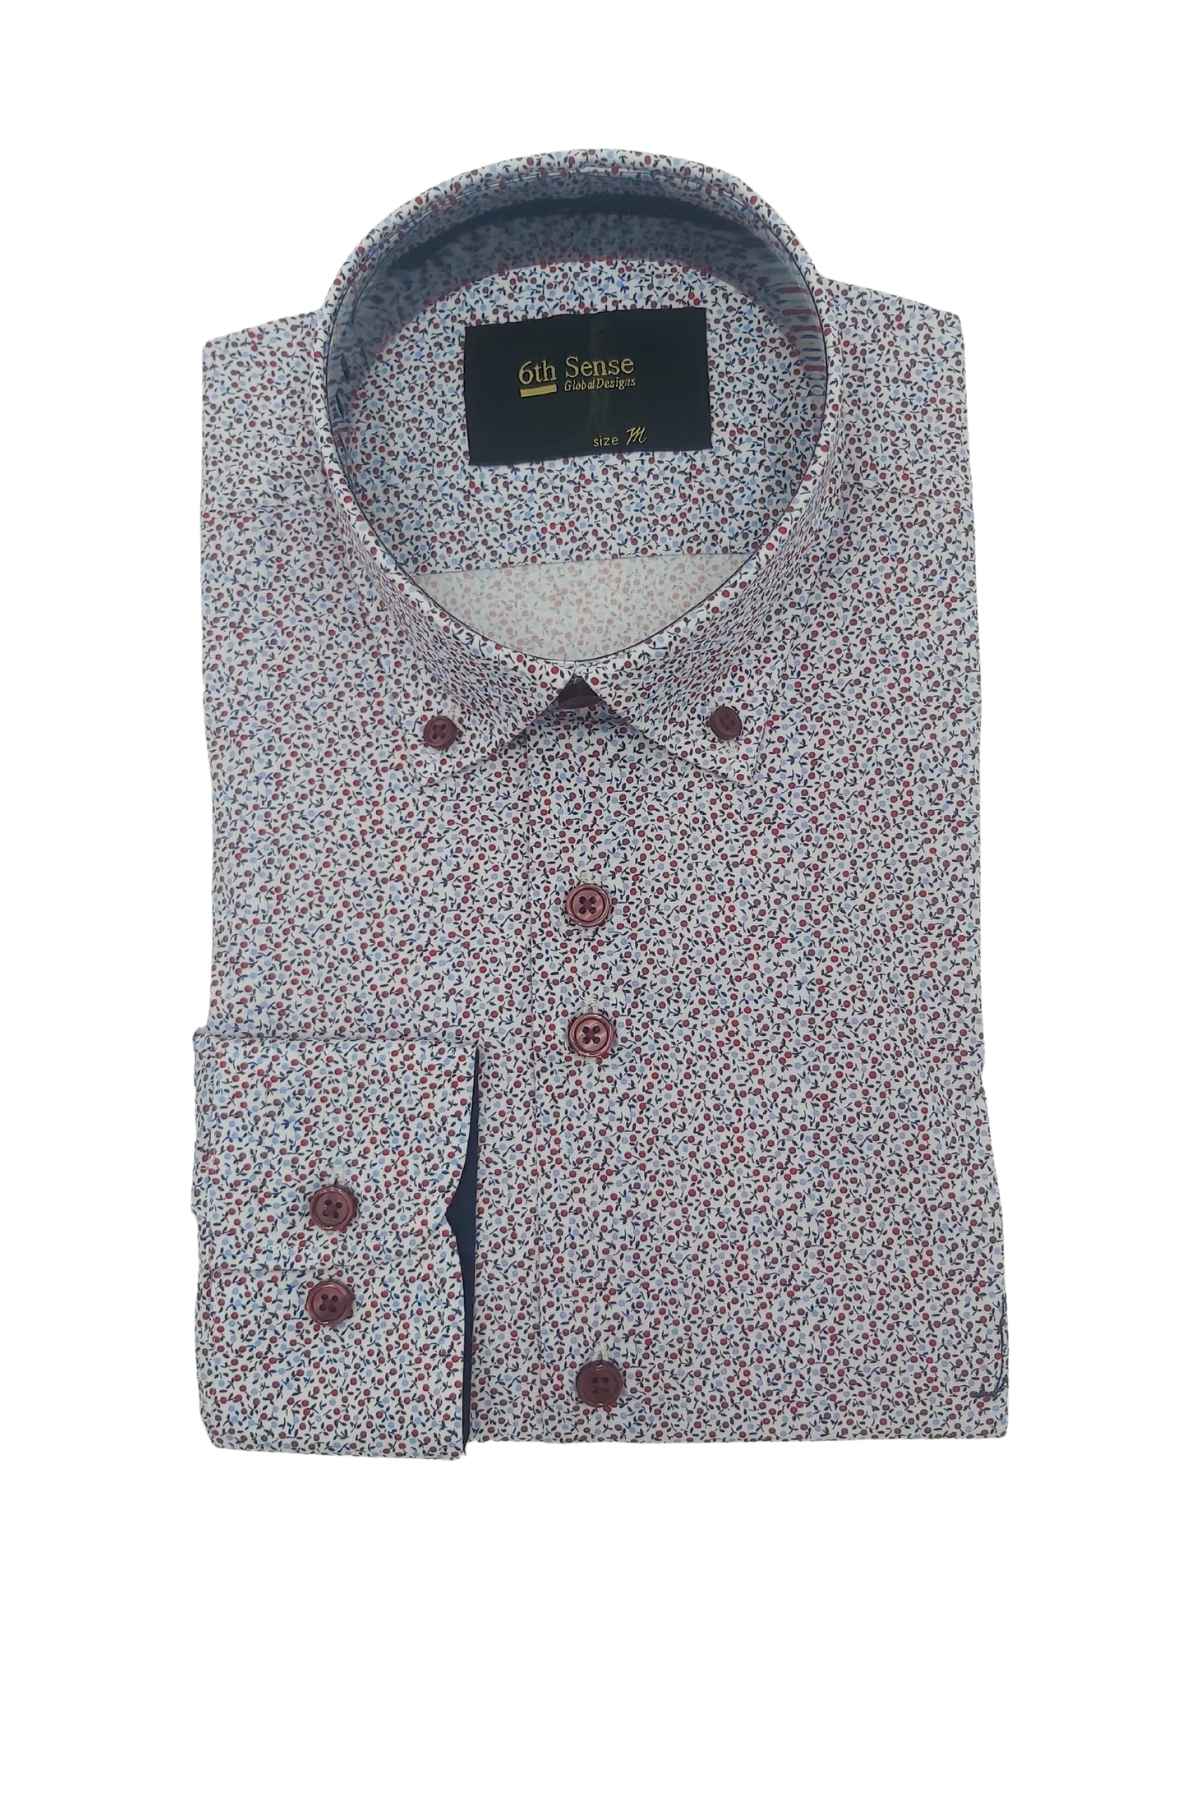 Men's Button Down Red/Blue Flower Print Shirt-Front View